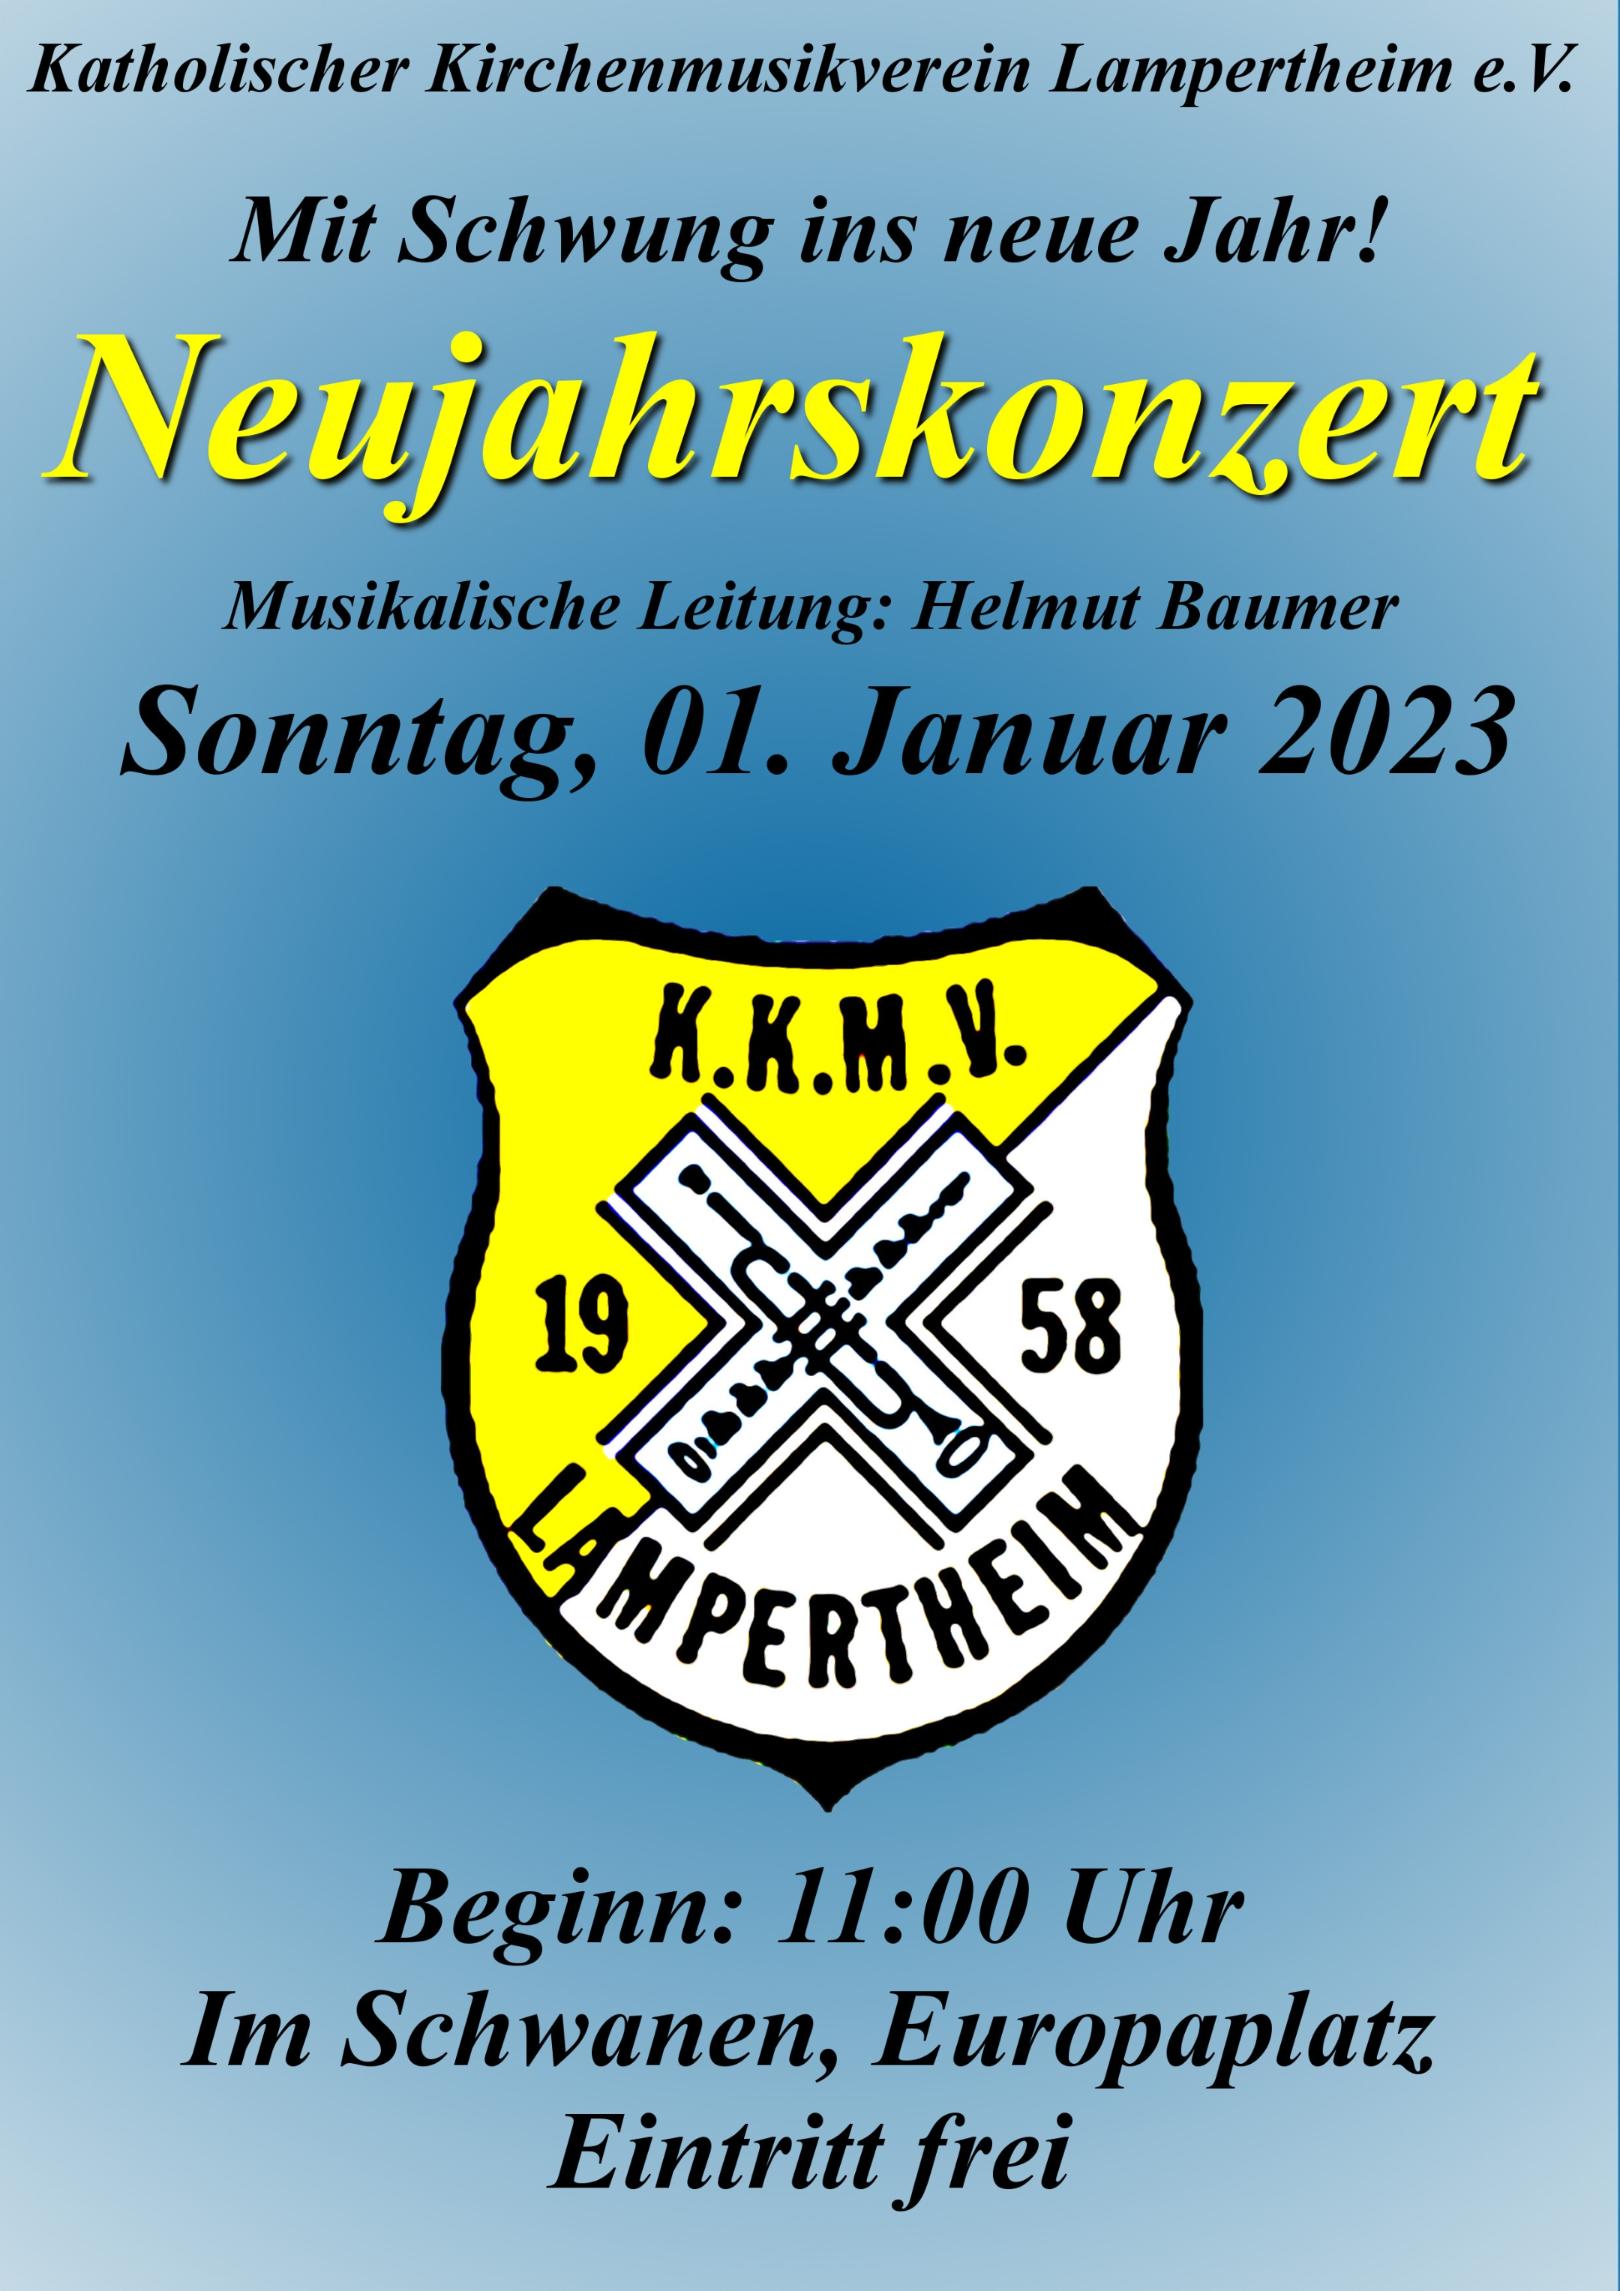 Plakat_Neujahrskonzert_farbig_2023 (c) KKMV Lampertheim